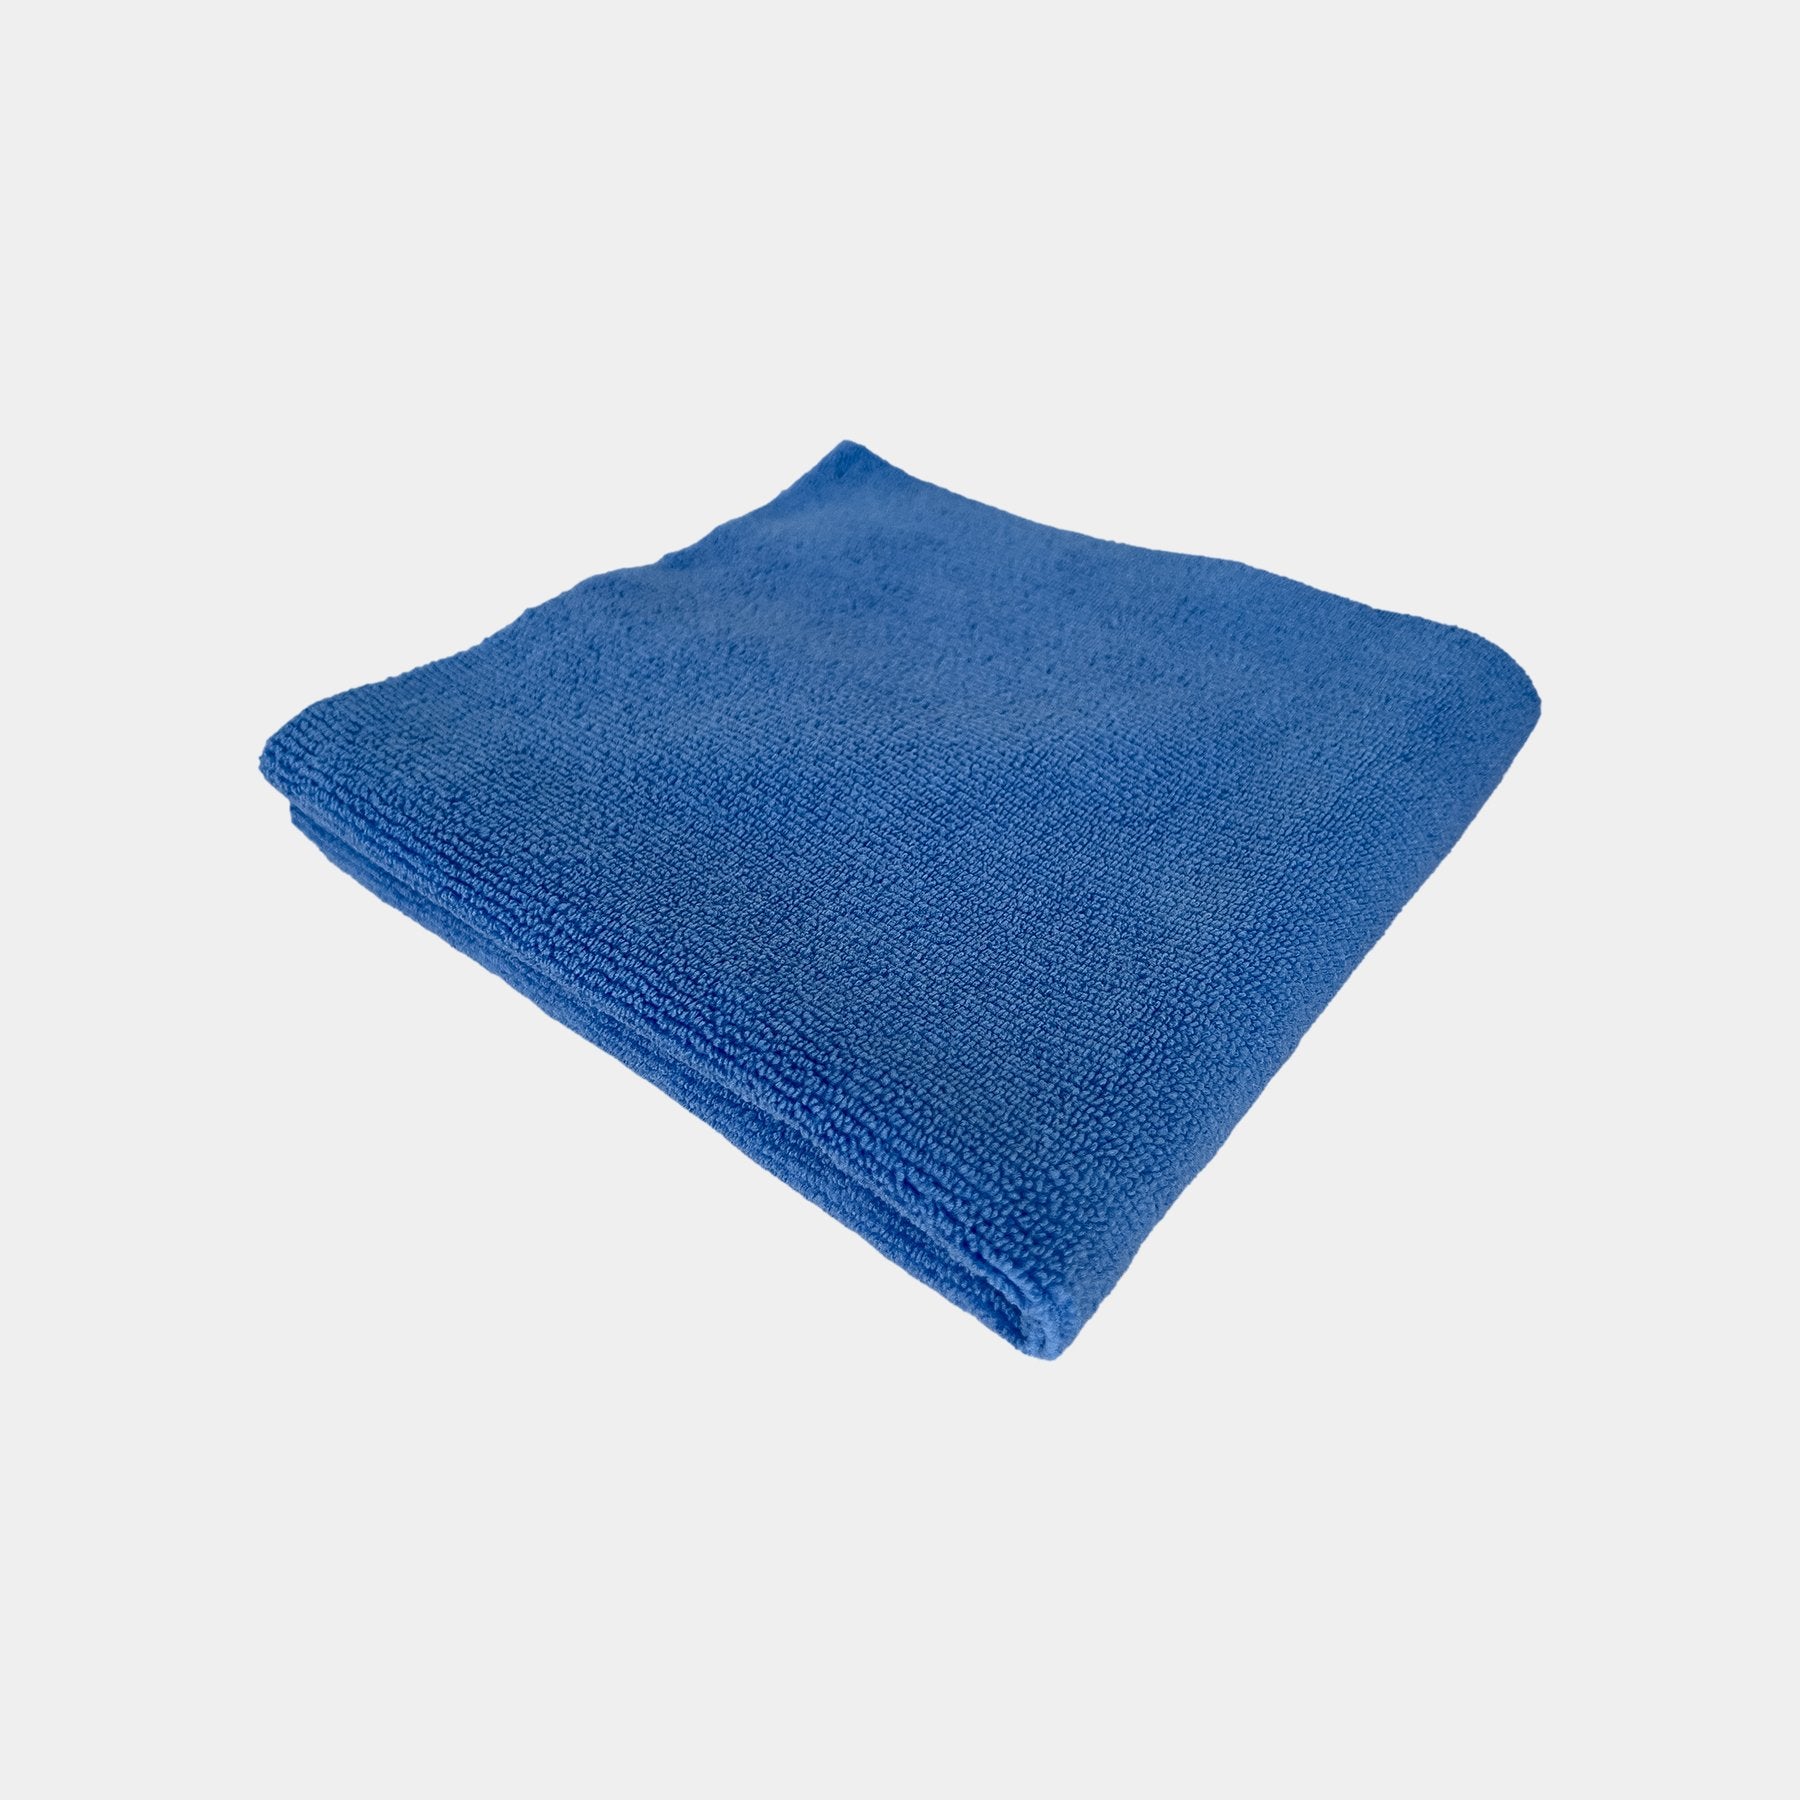 Car care microfibre soft blue multi-purpose cloth 40x40cm displayed on a white background.